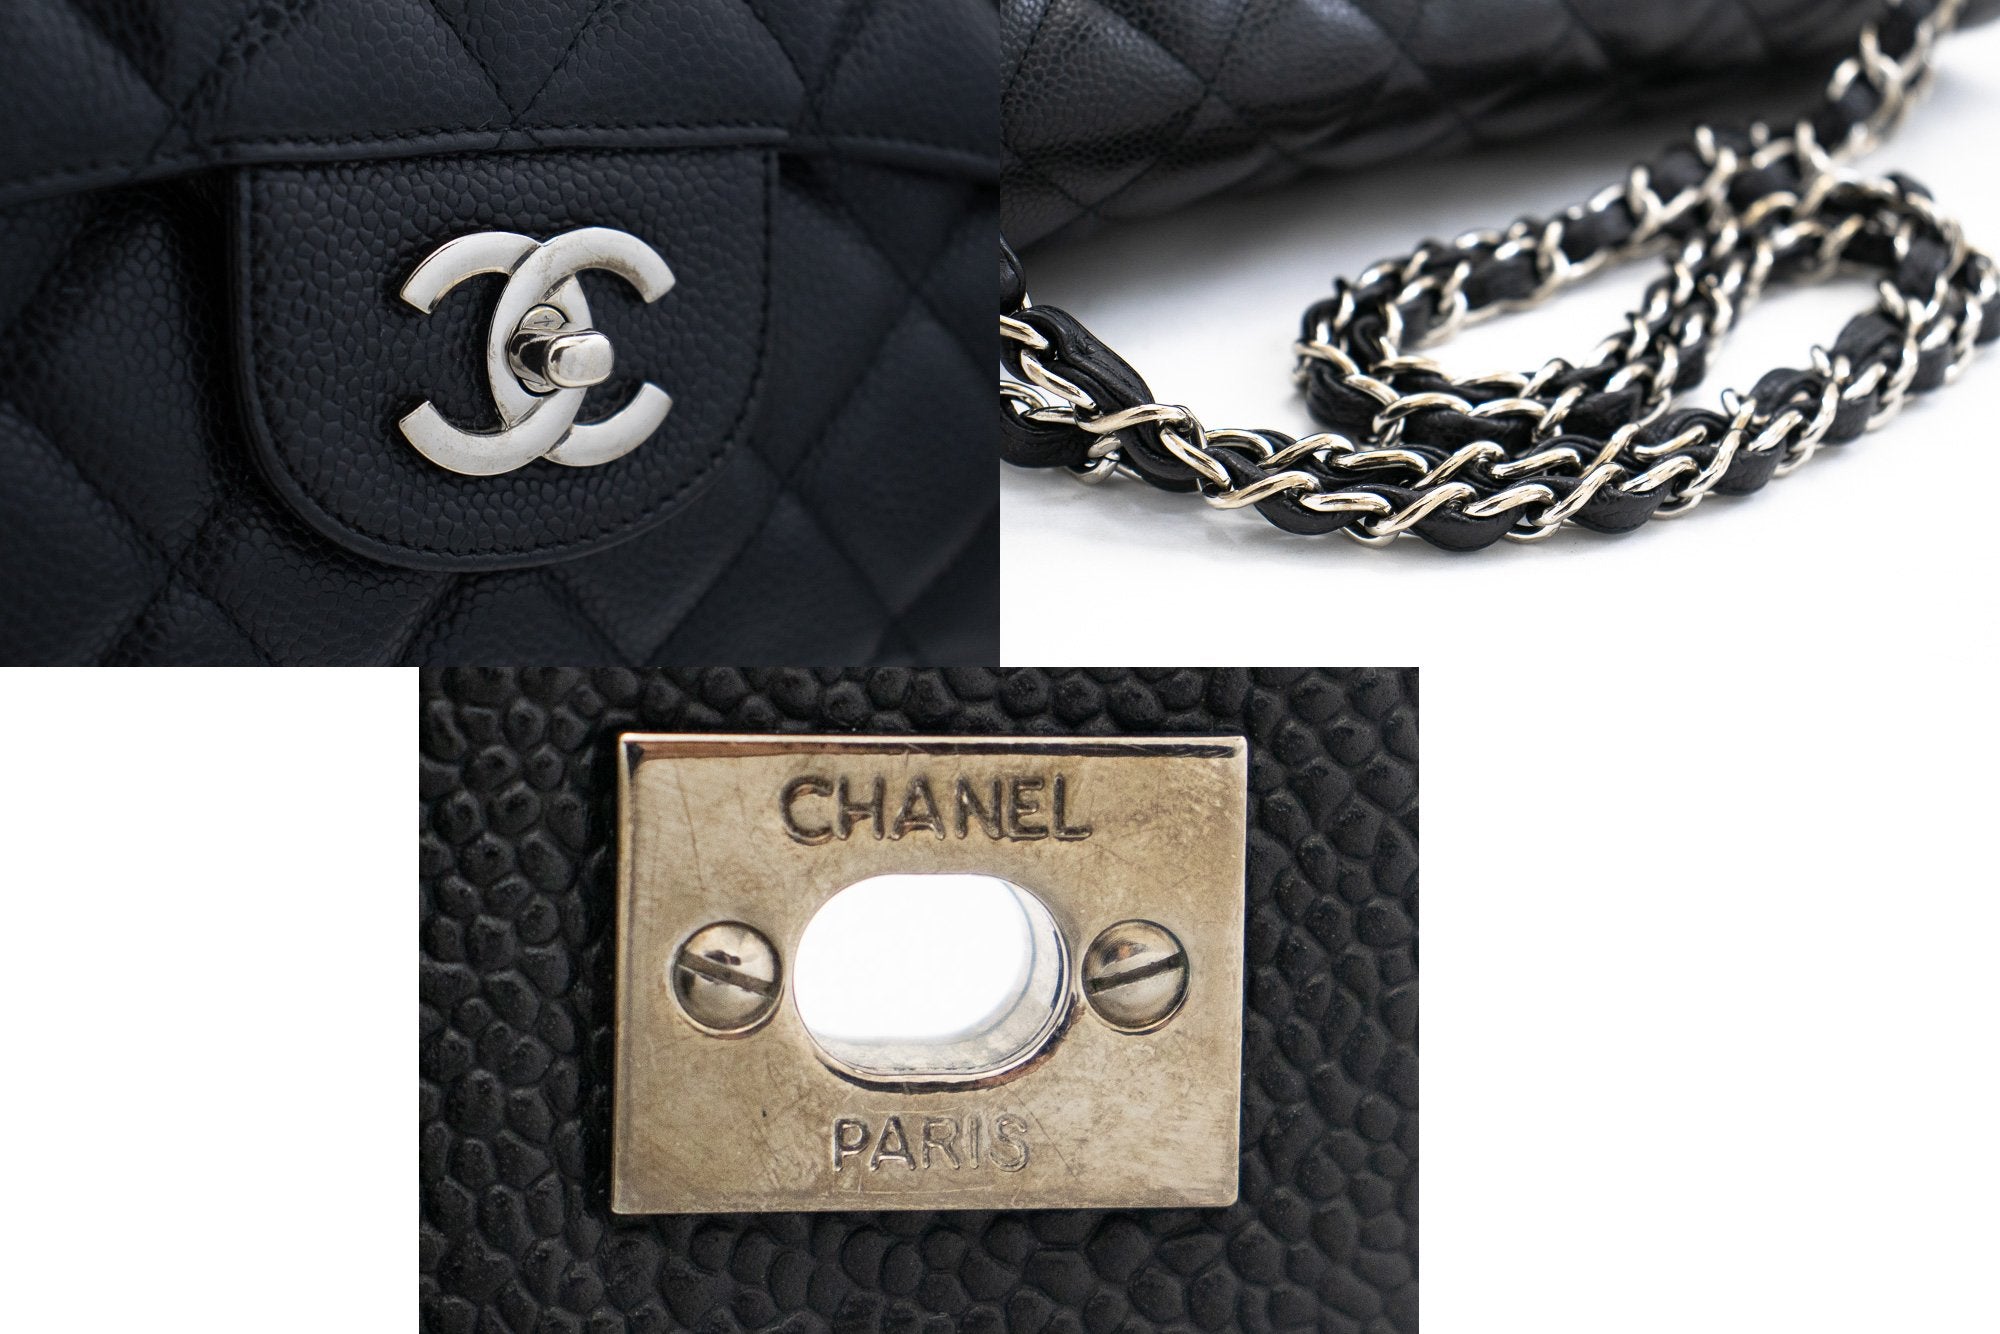 Chanel Caviar Grained Calfskin Flap Chain Shoulder Bag Black 13 i90